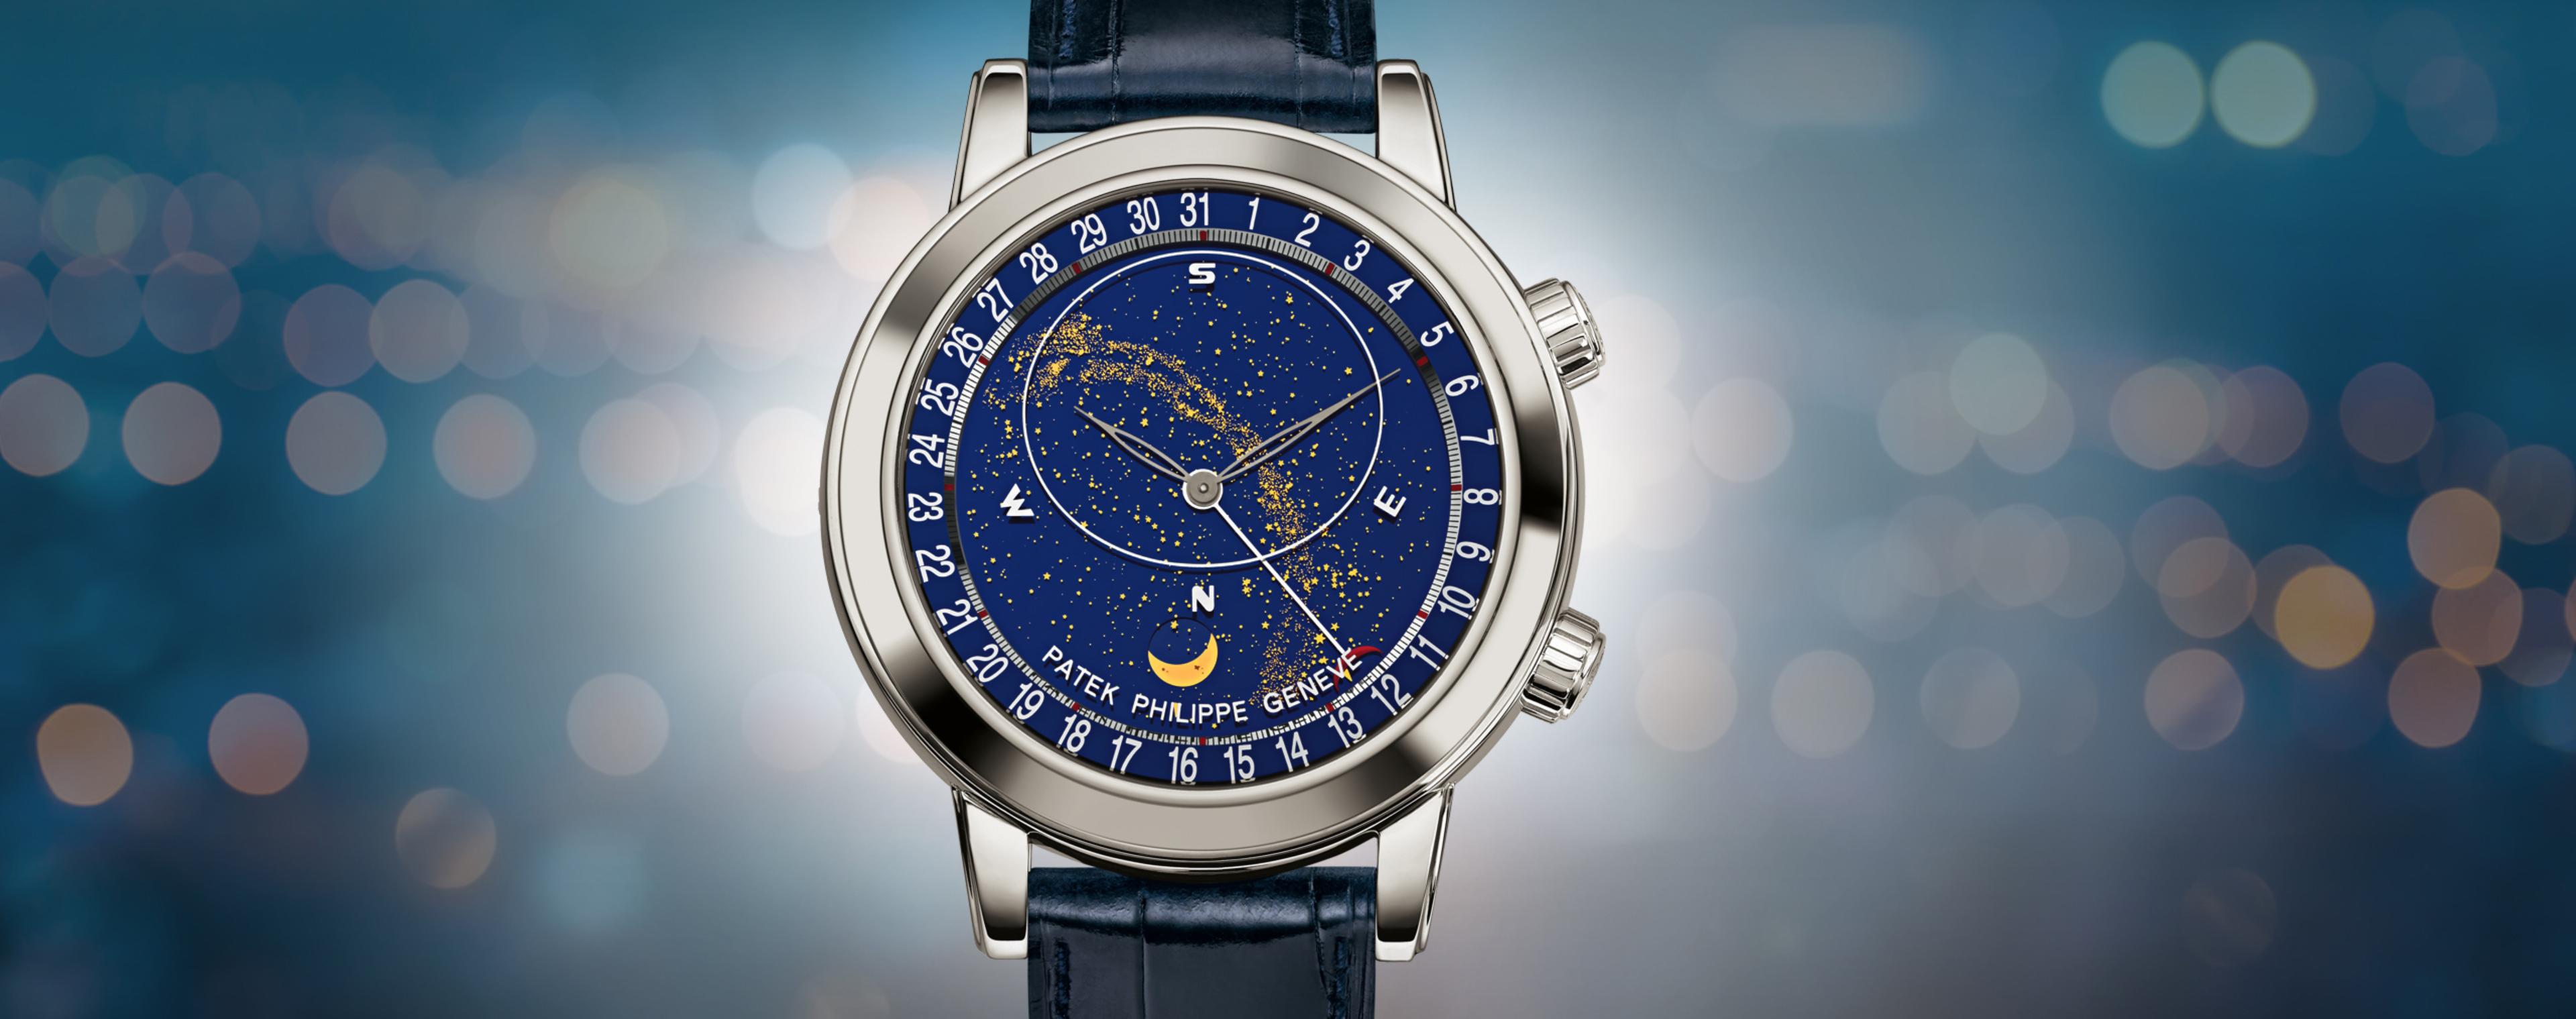 Patek Philippe Model Gondolo 18K White Gold Watch Preowned-5111G-001